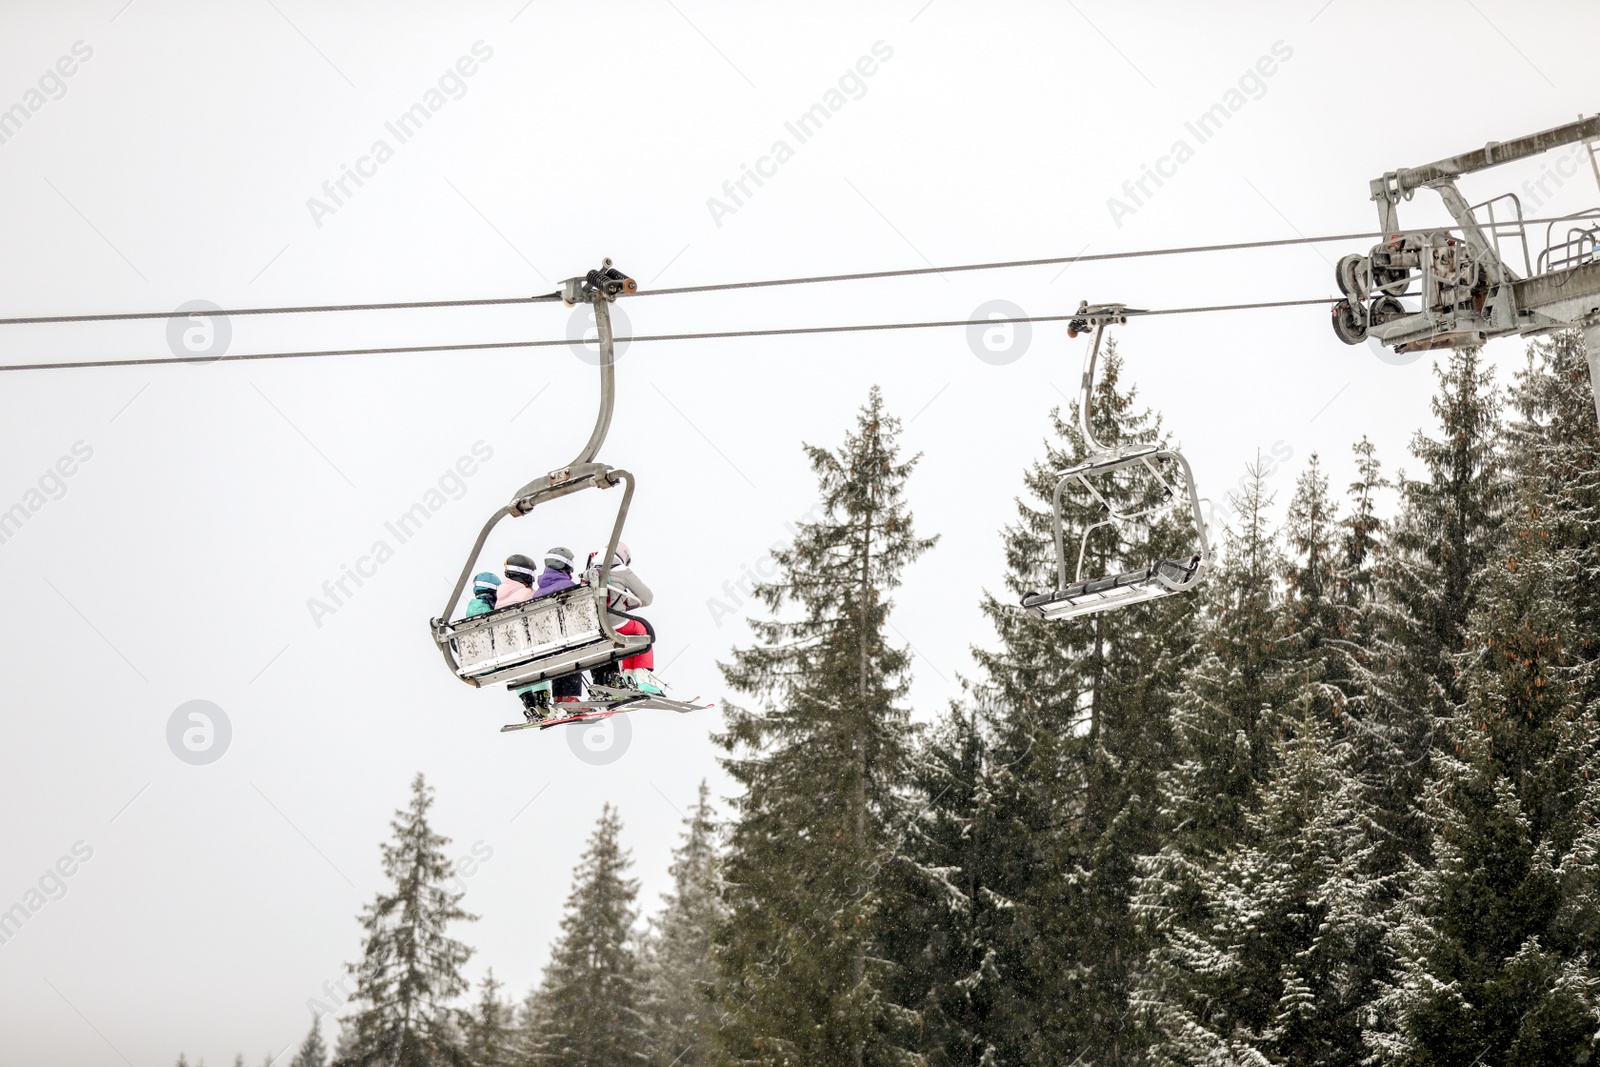 Photo of People using ski lift at mountain resort. Winter vacation